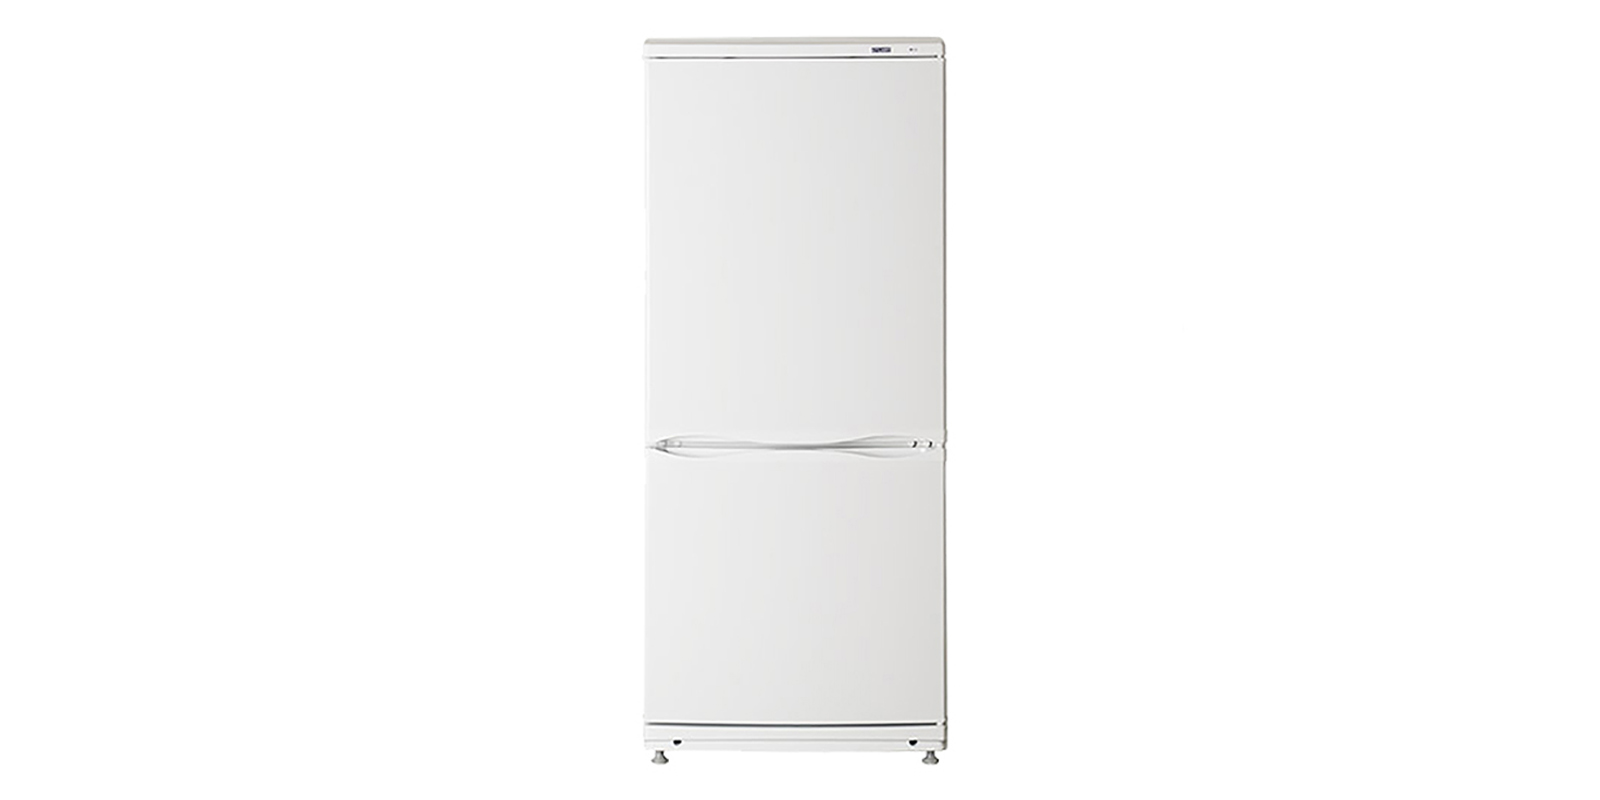 Купит холодильник атлант 6025. Холодильник Атлант 6023-031. Холодильник Атлант хм 6025. Холодильник Атлант 4208. Холодильник Атлант хм 4025-000.